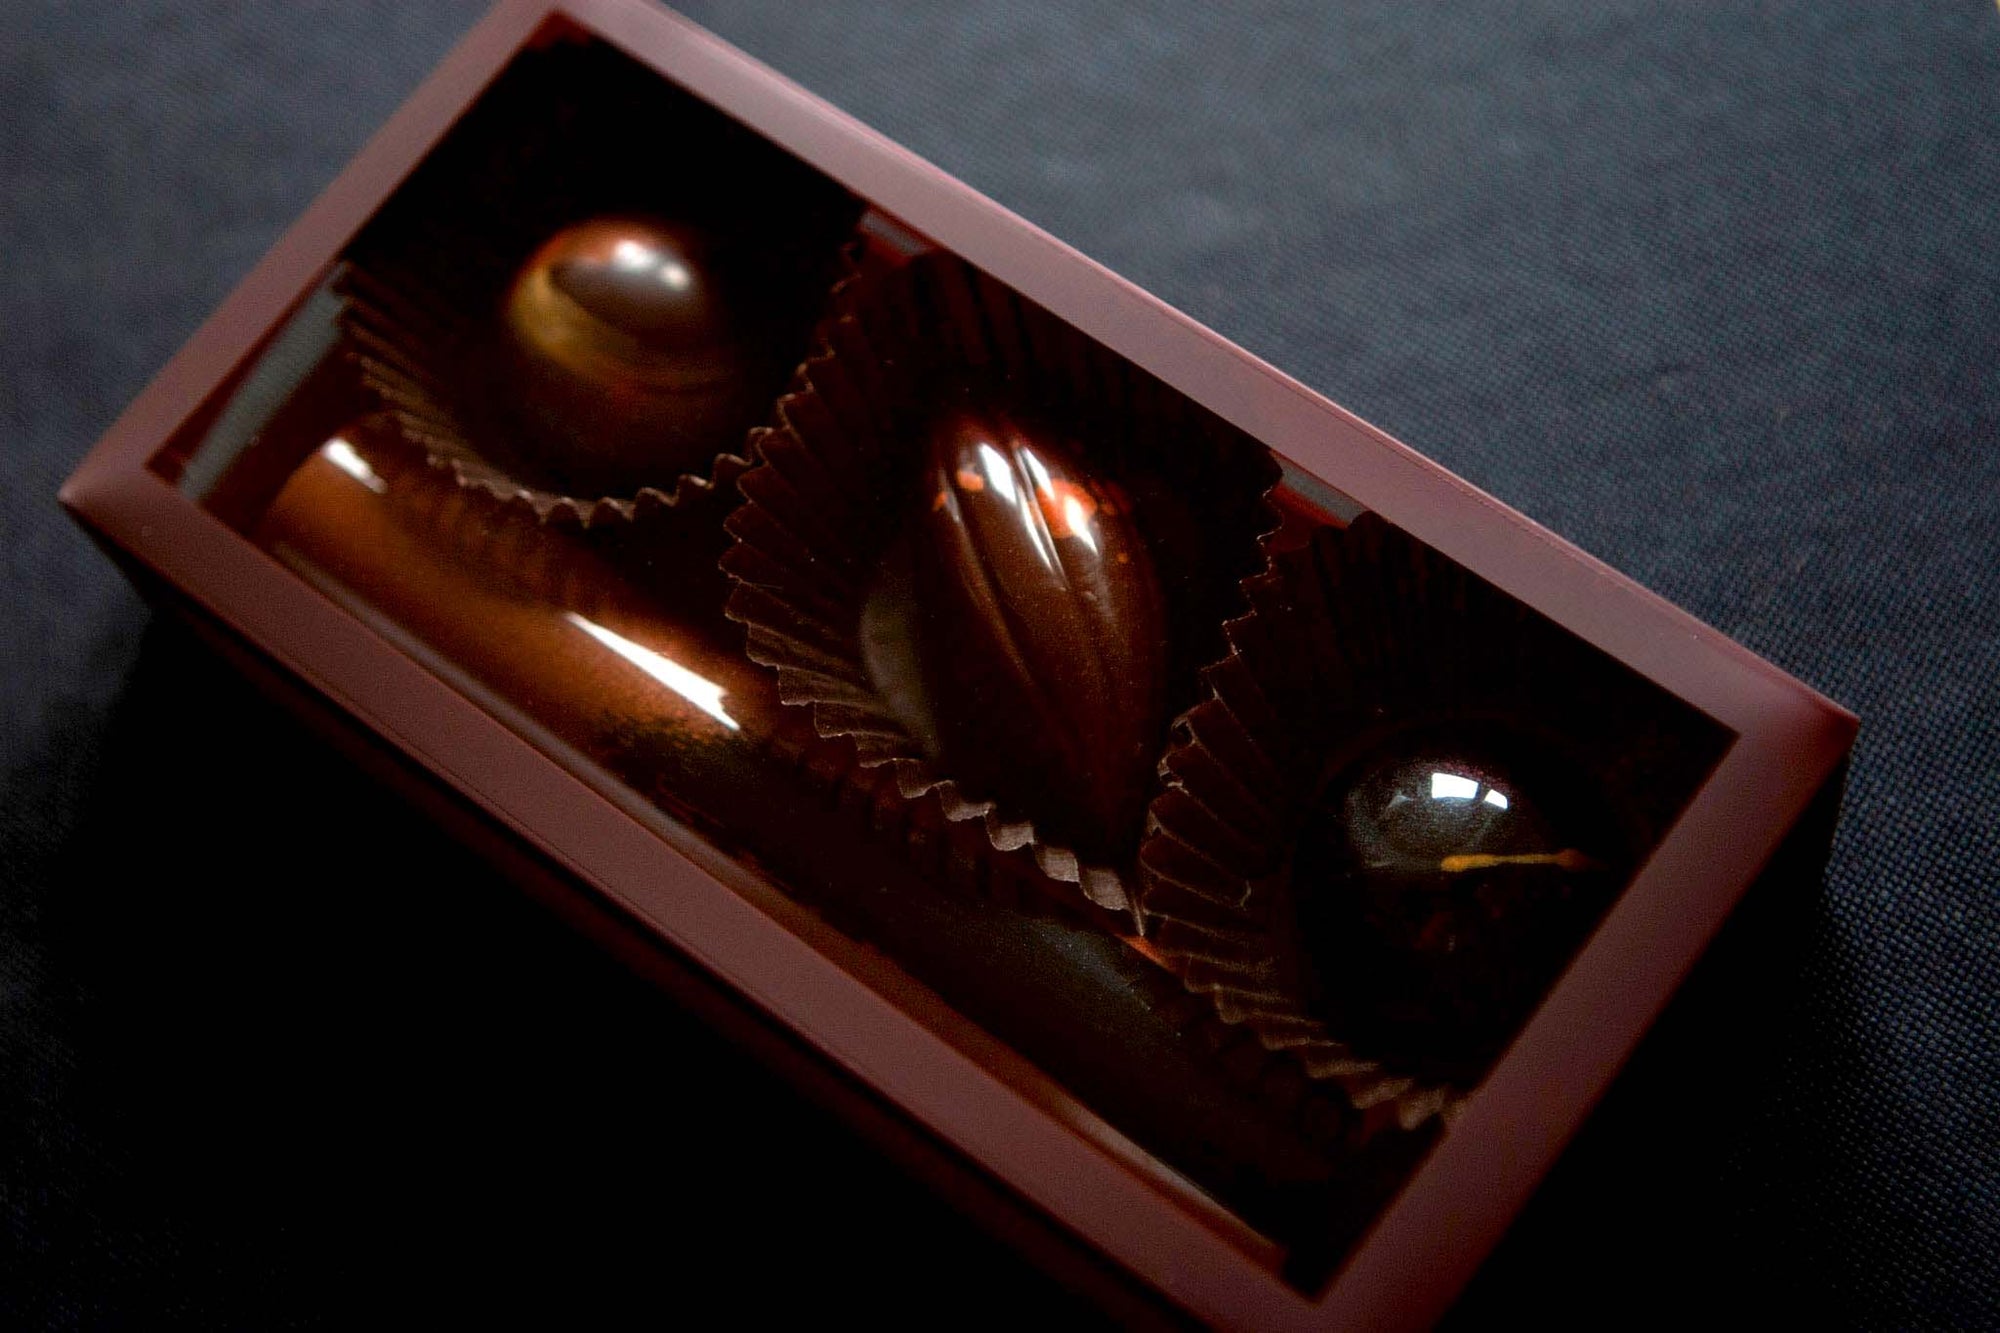 PRE-ORDER: Japanese Artisan Chocolates